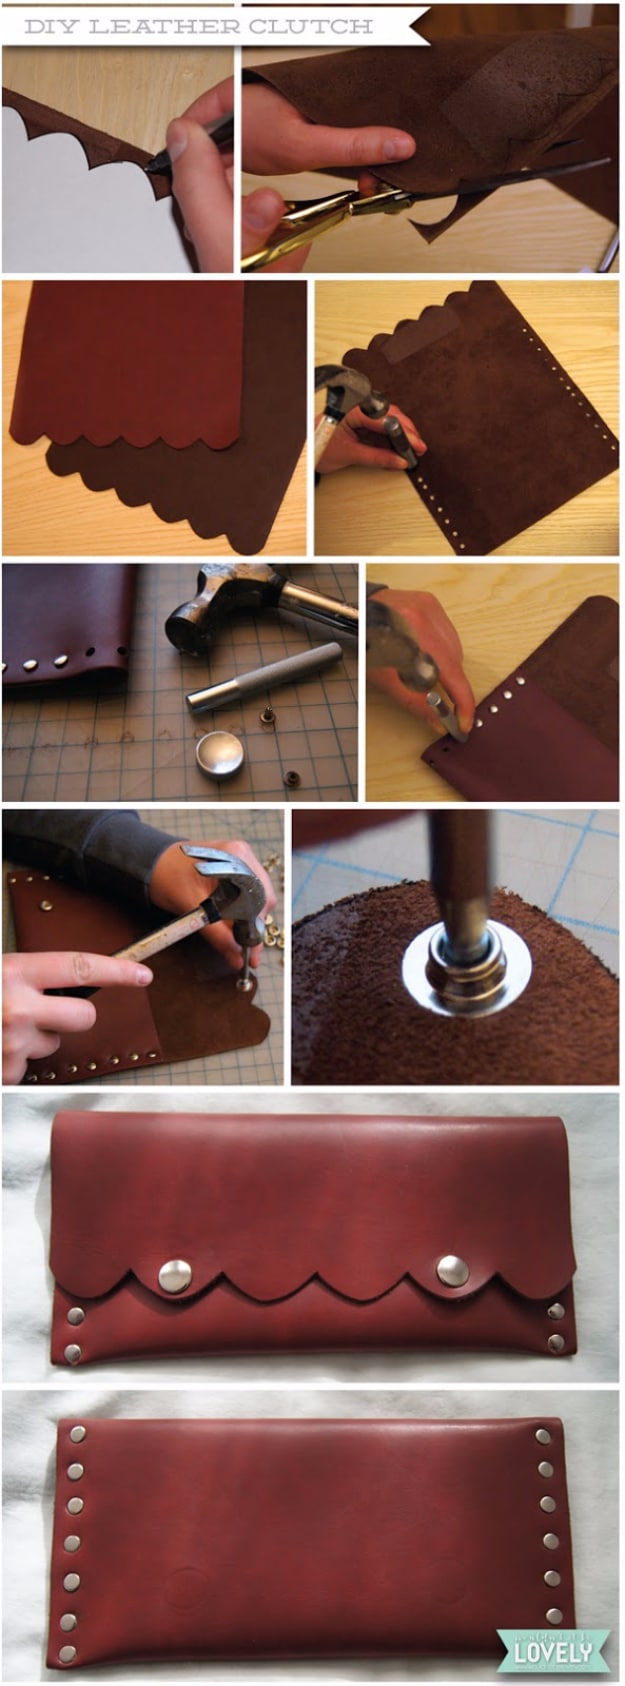 diy leather ideas